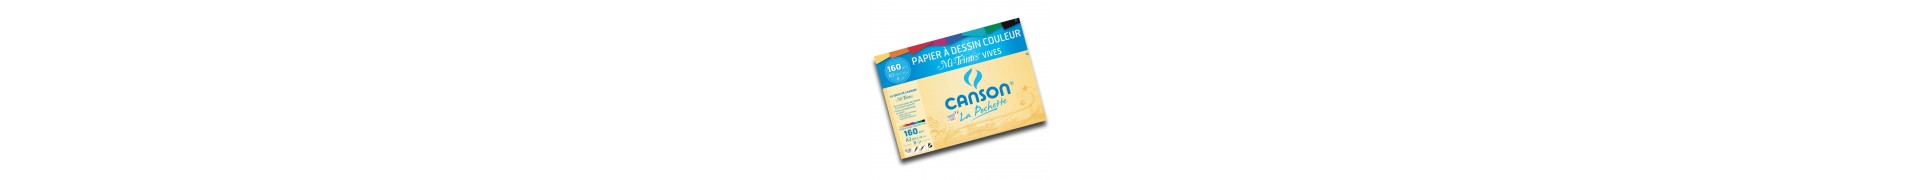 Pochette dessin couleur CANSON Mi-teintes - 160gr (12f) - F:24 x 32 cm - 2776 - Teintes vives 